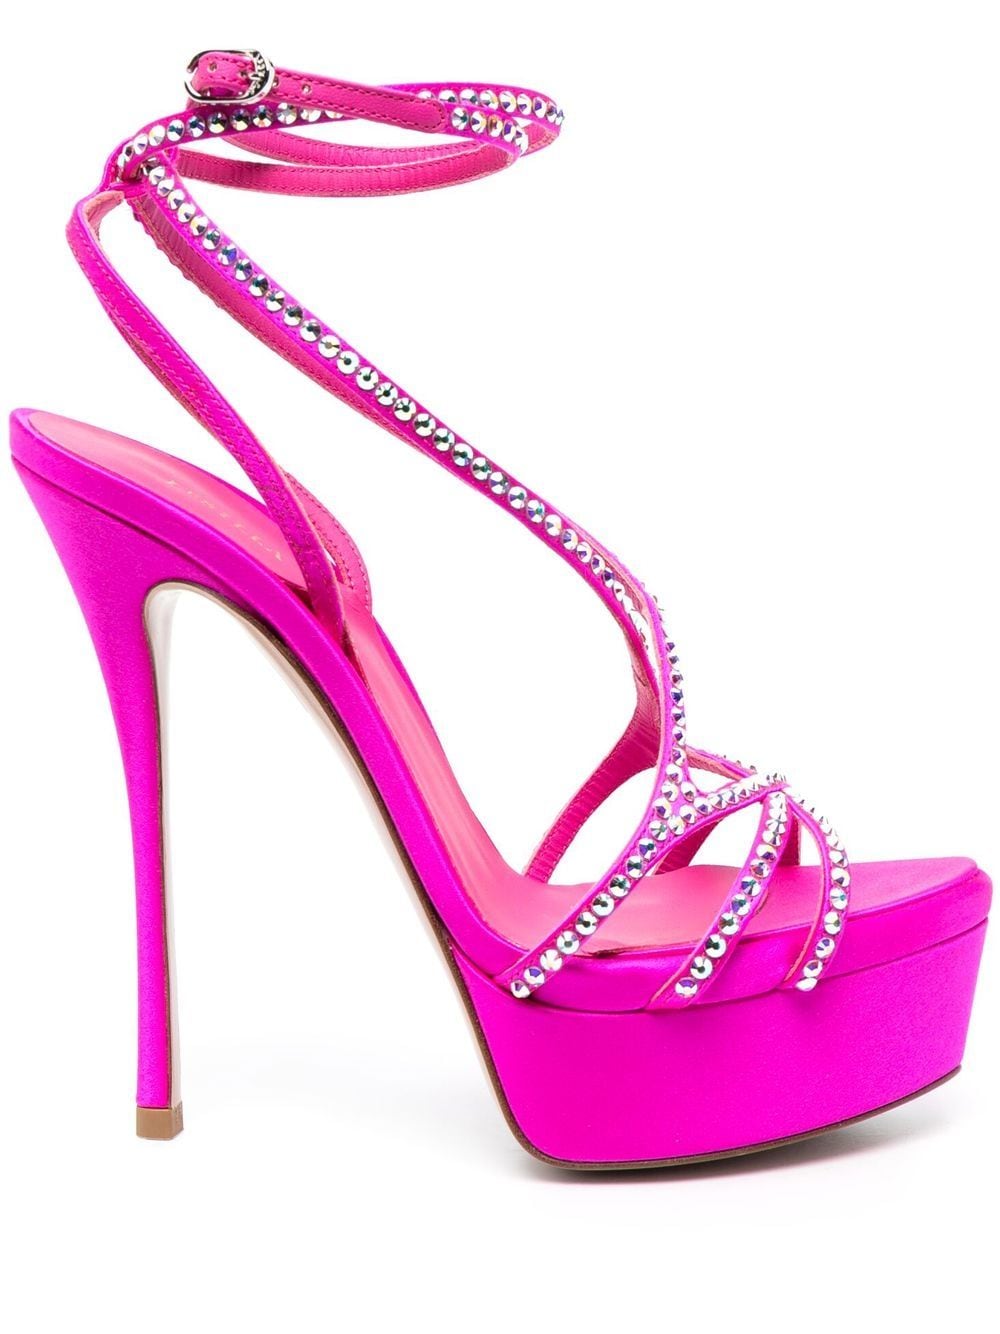 Le Silla Belen 140mm sandals - Pink von Le Silla